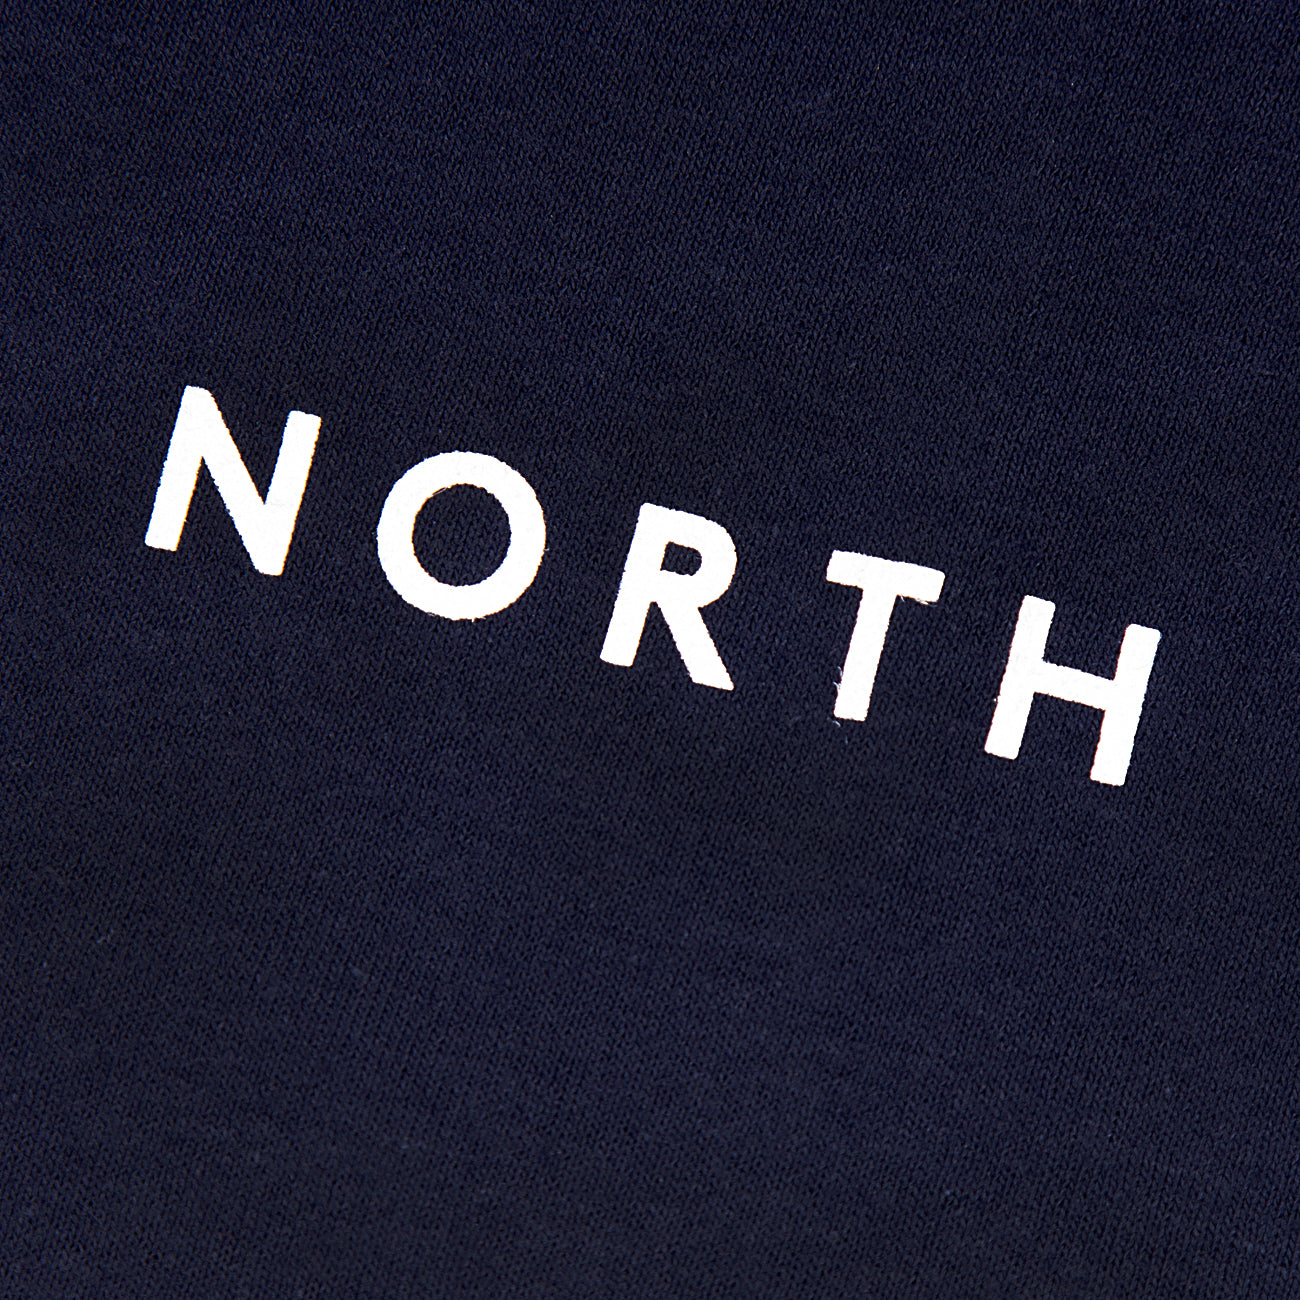 North Film Star Hooded Sweatshirt - Navy/White